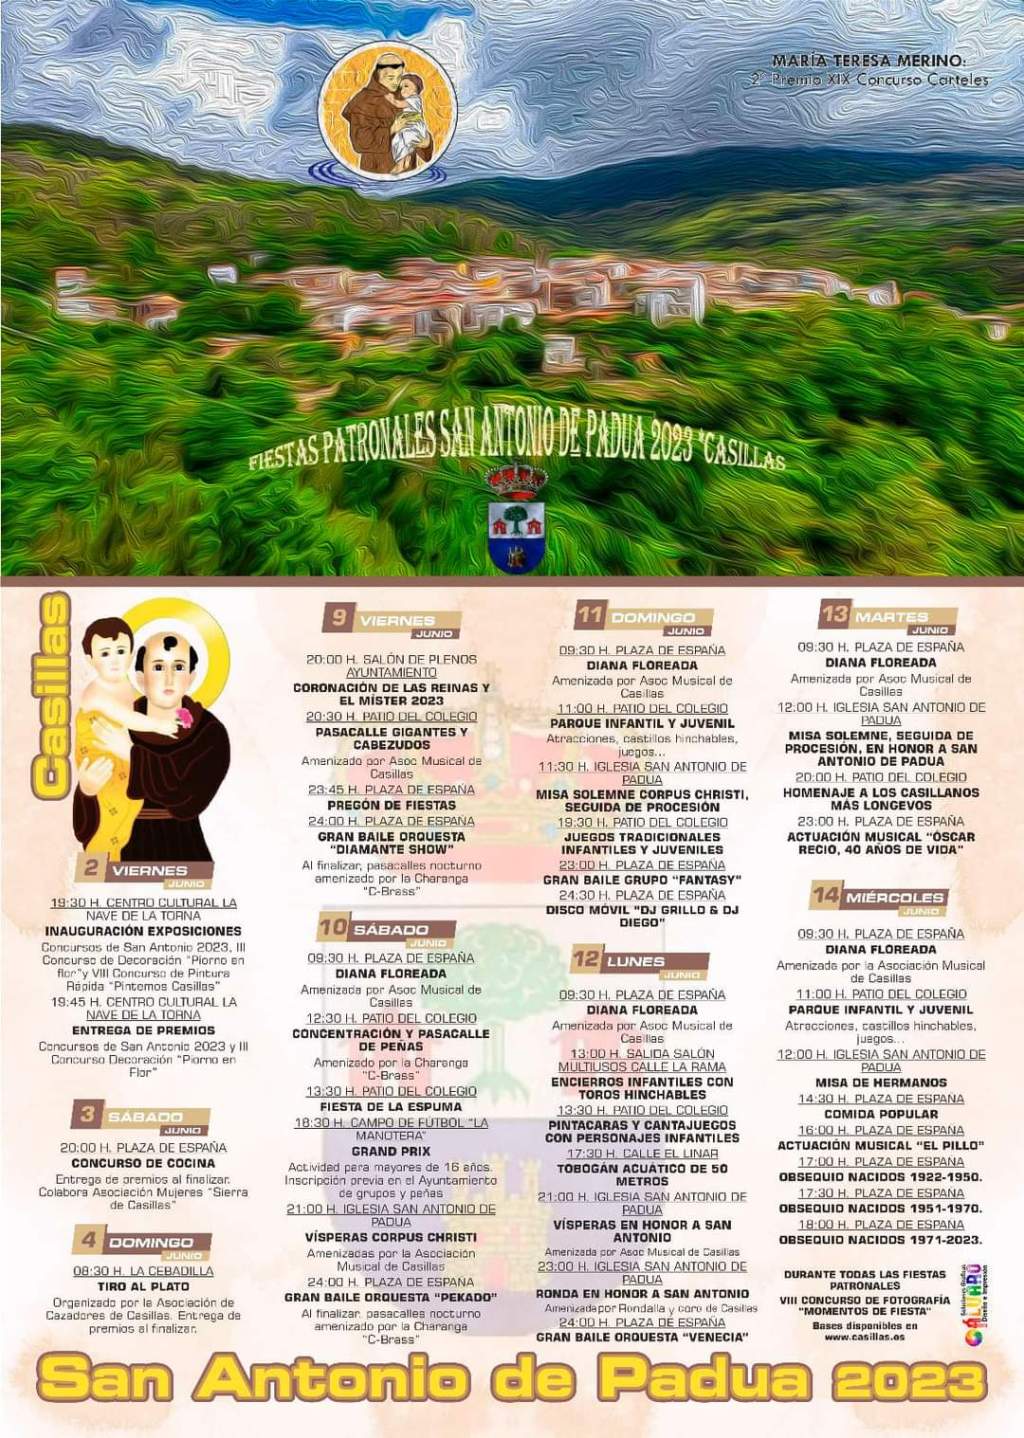 Fiestas de San Antonio de Padua 2023 en Casillas